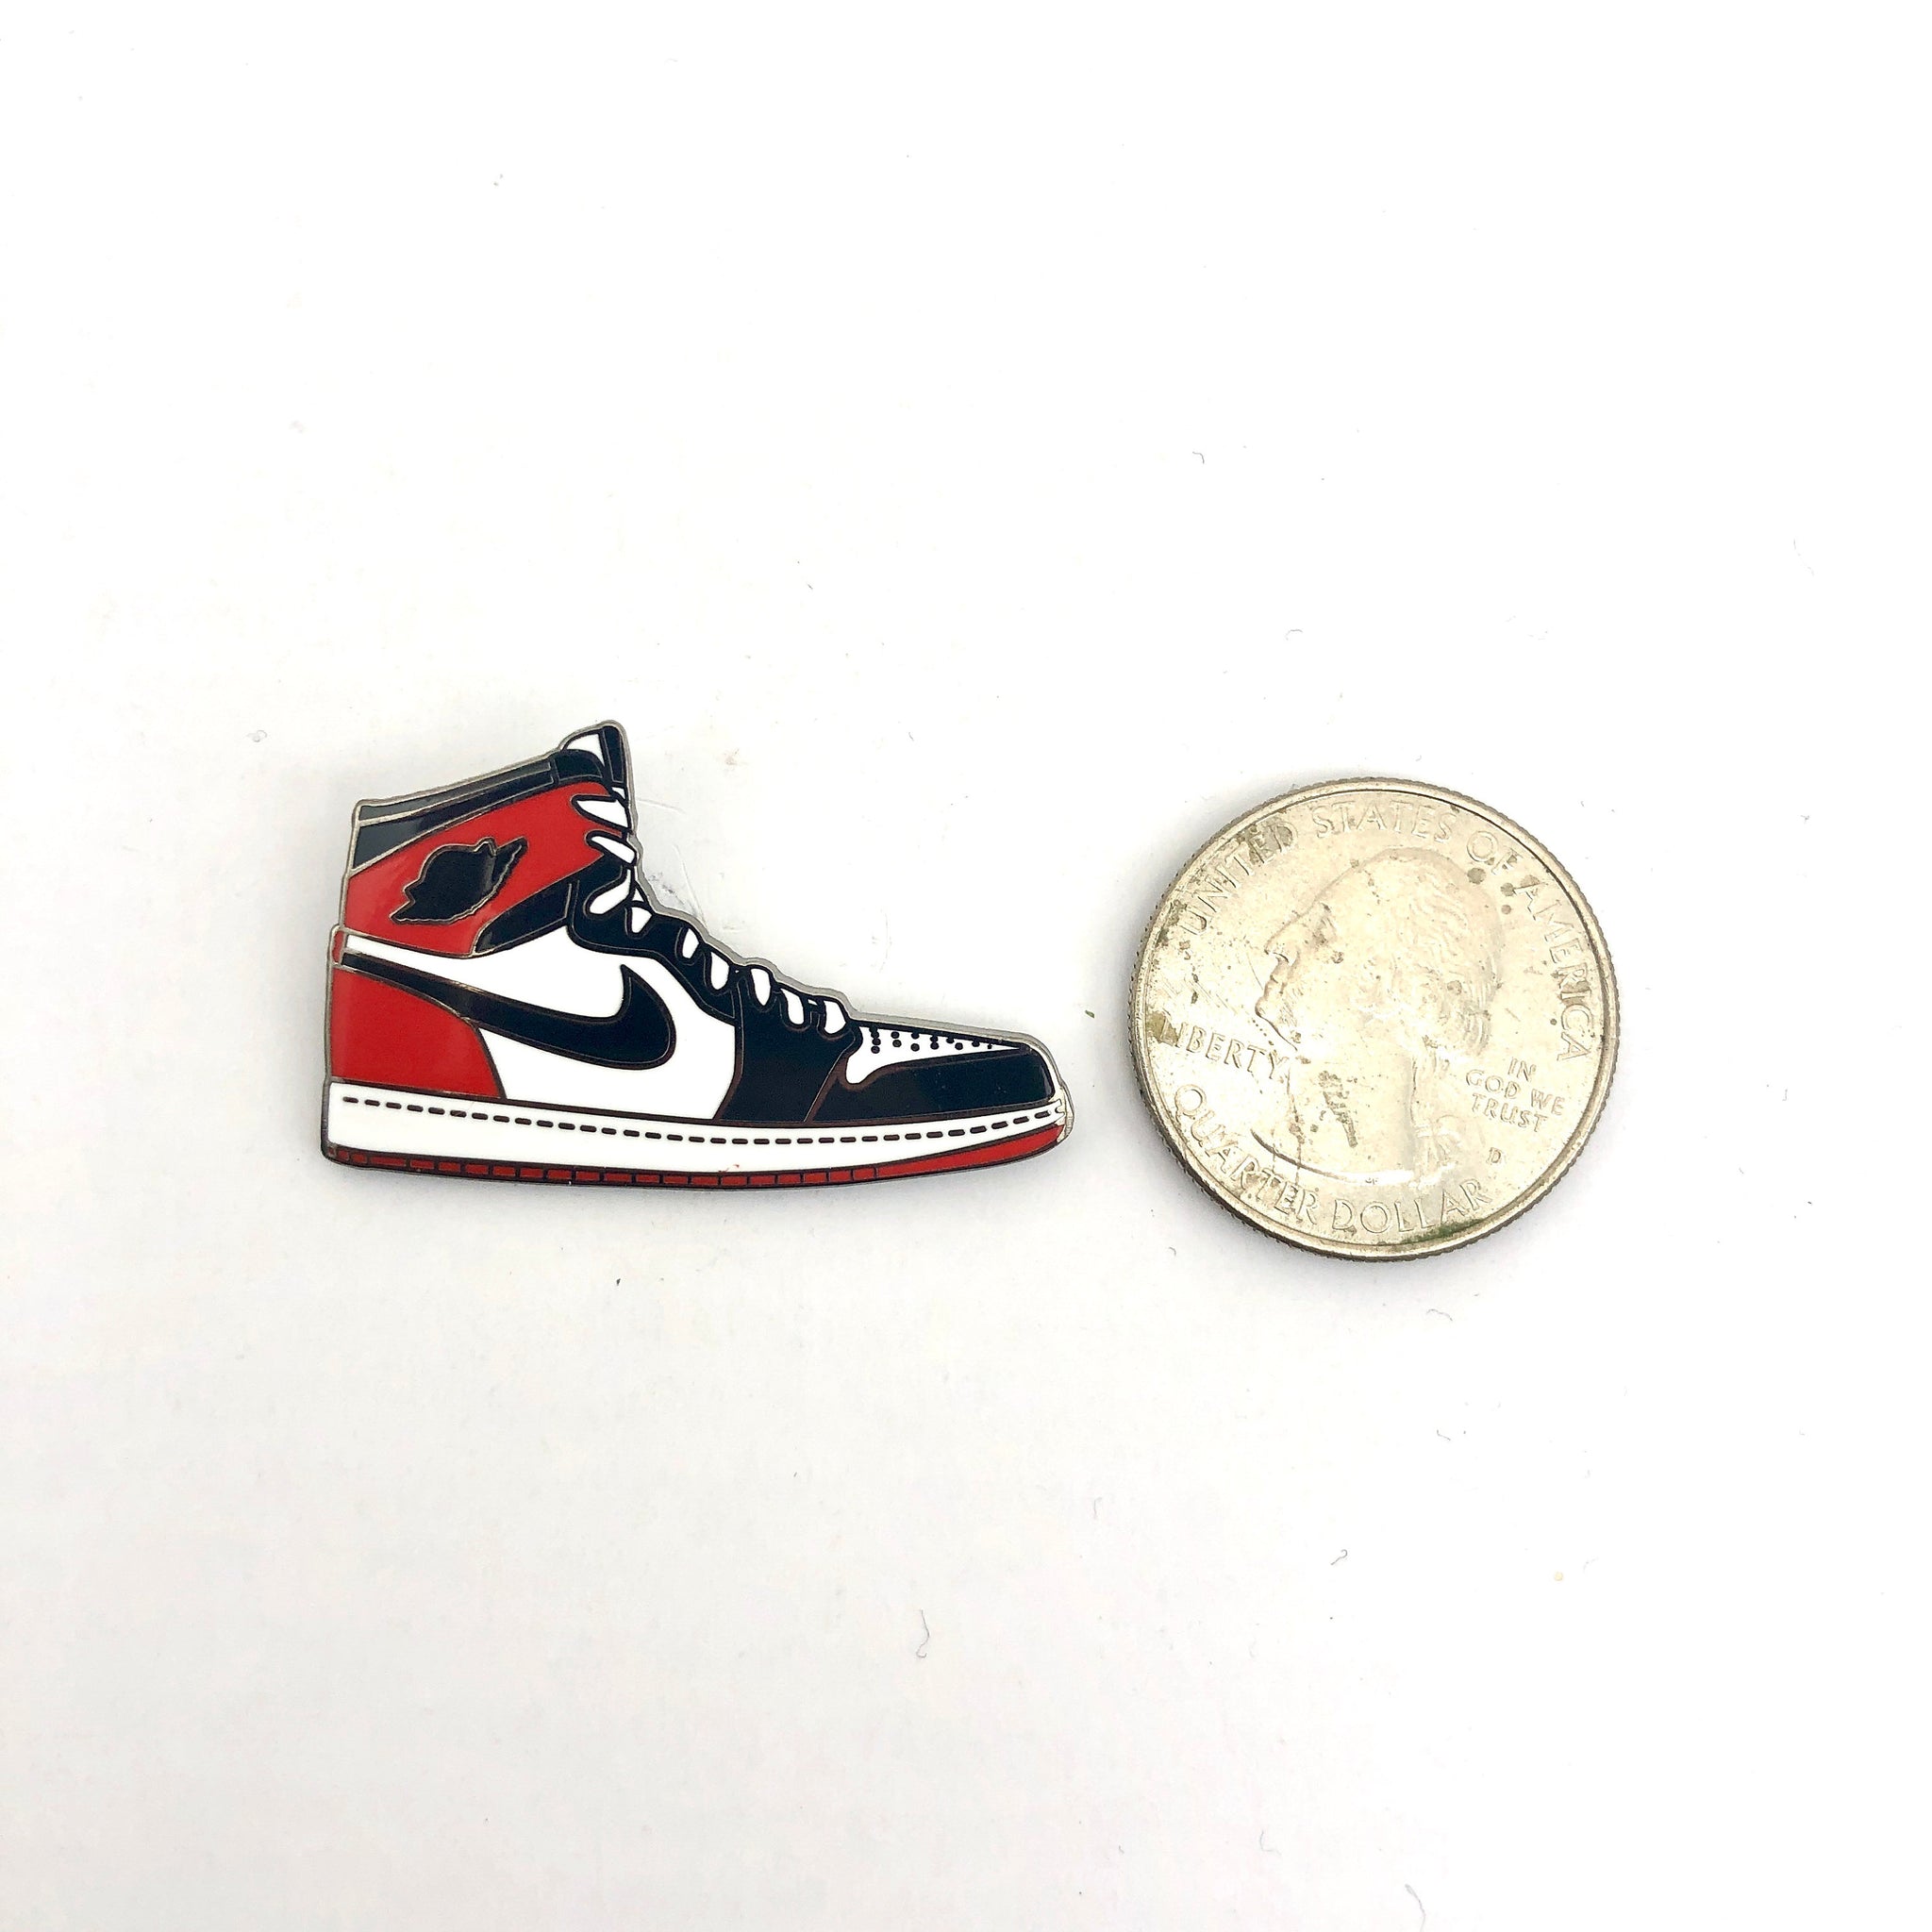 Pin on unique Jordan's